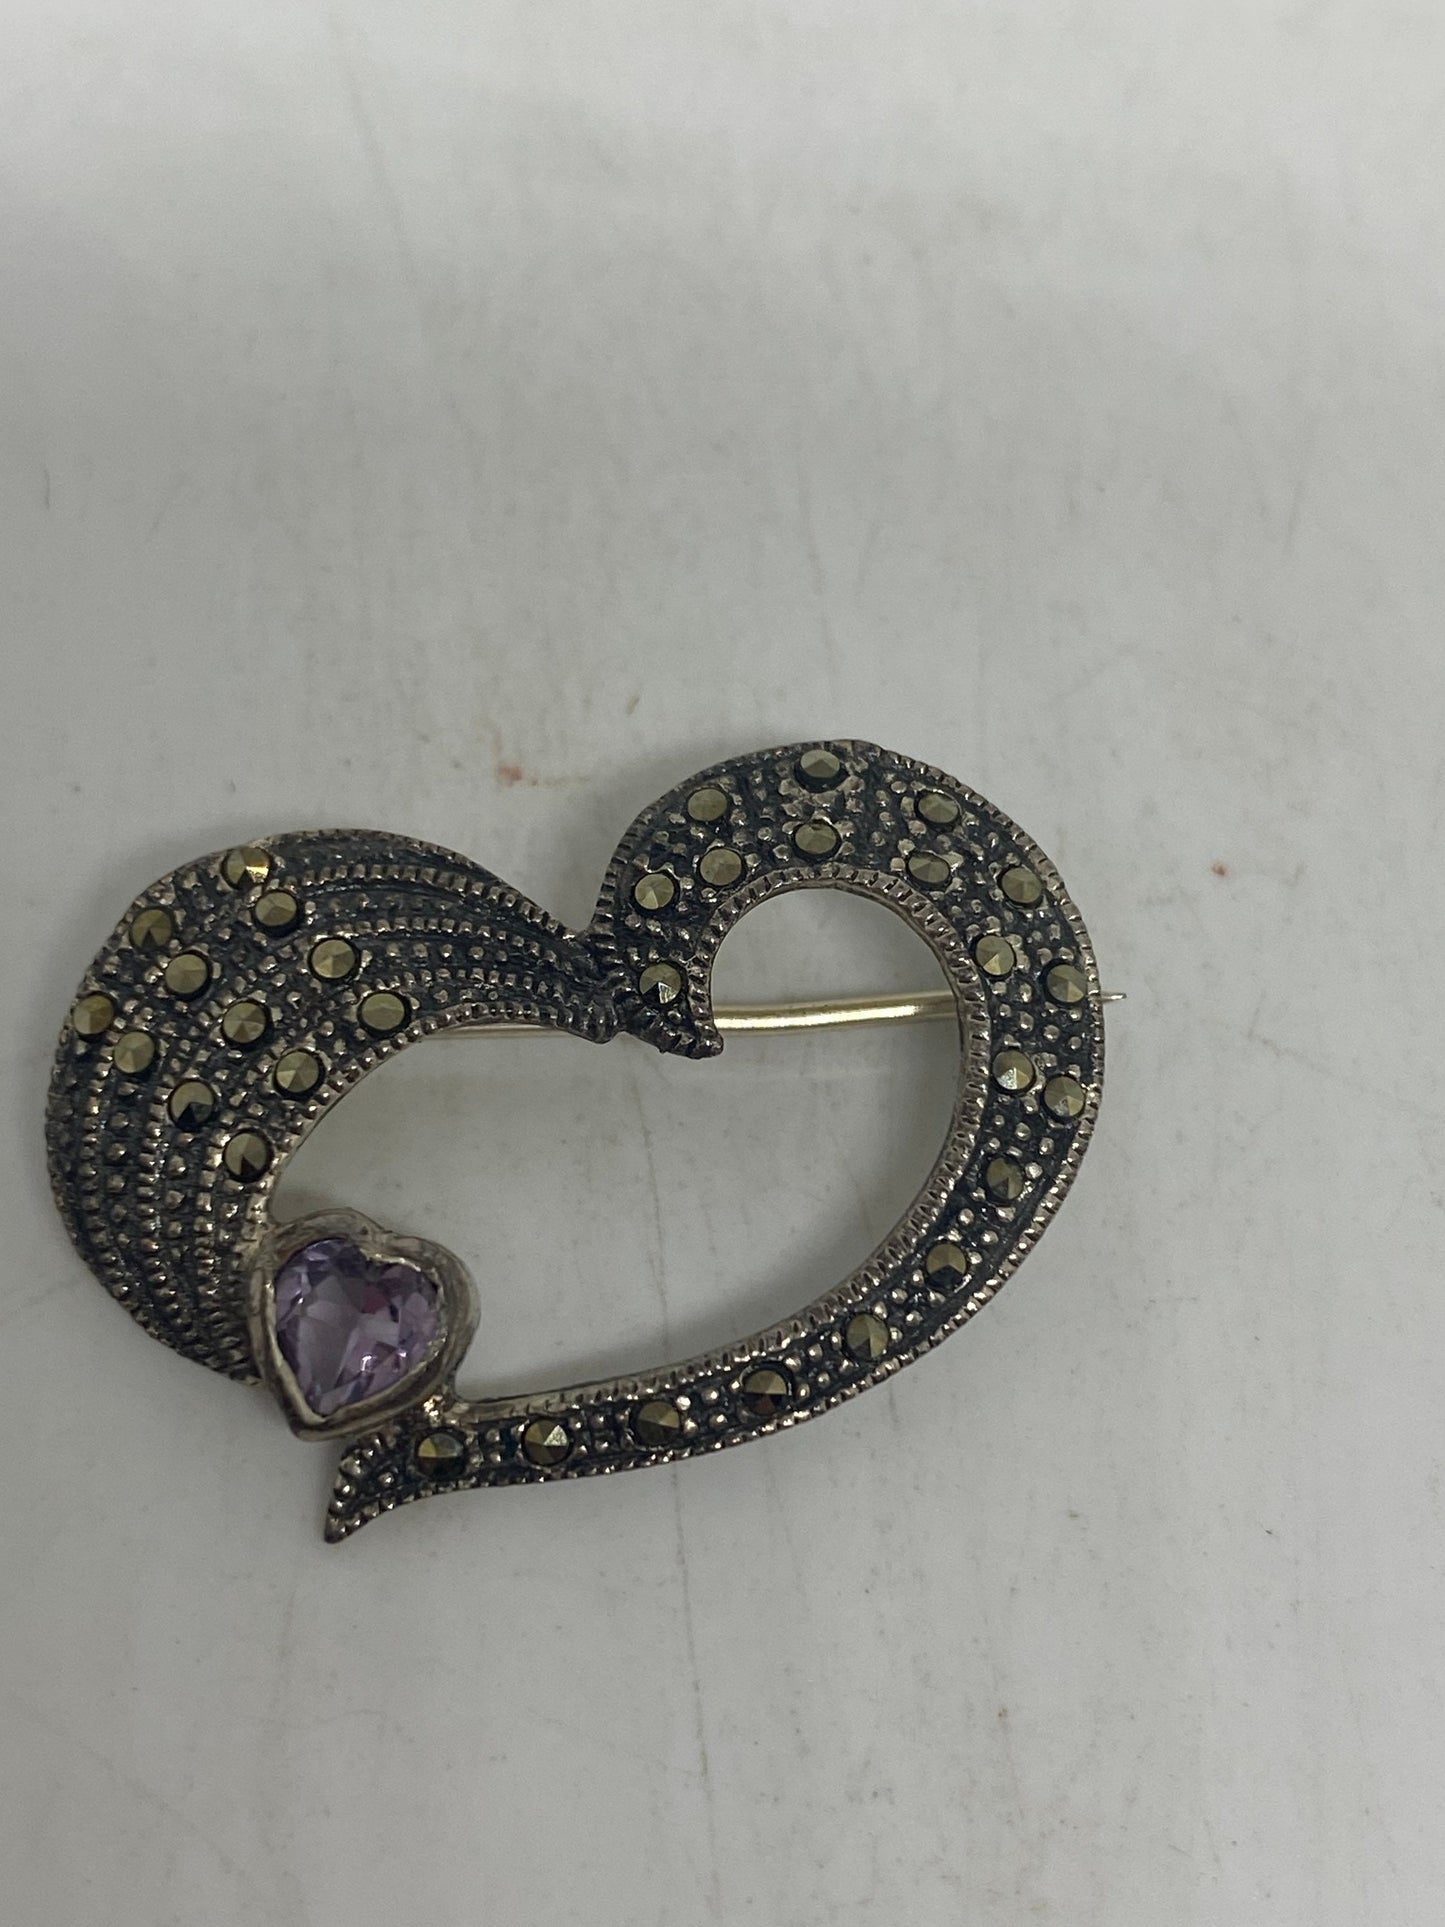 Vintage Heart Pin Marcasite 925 Sterling Silver Amethyst Valentine Brooch